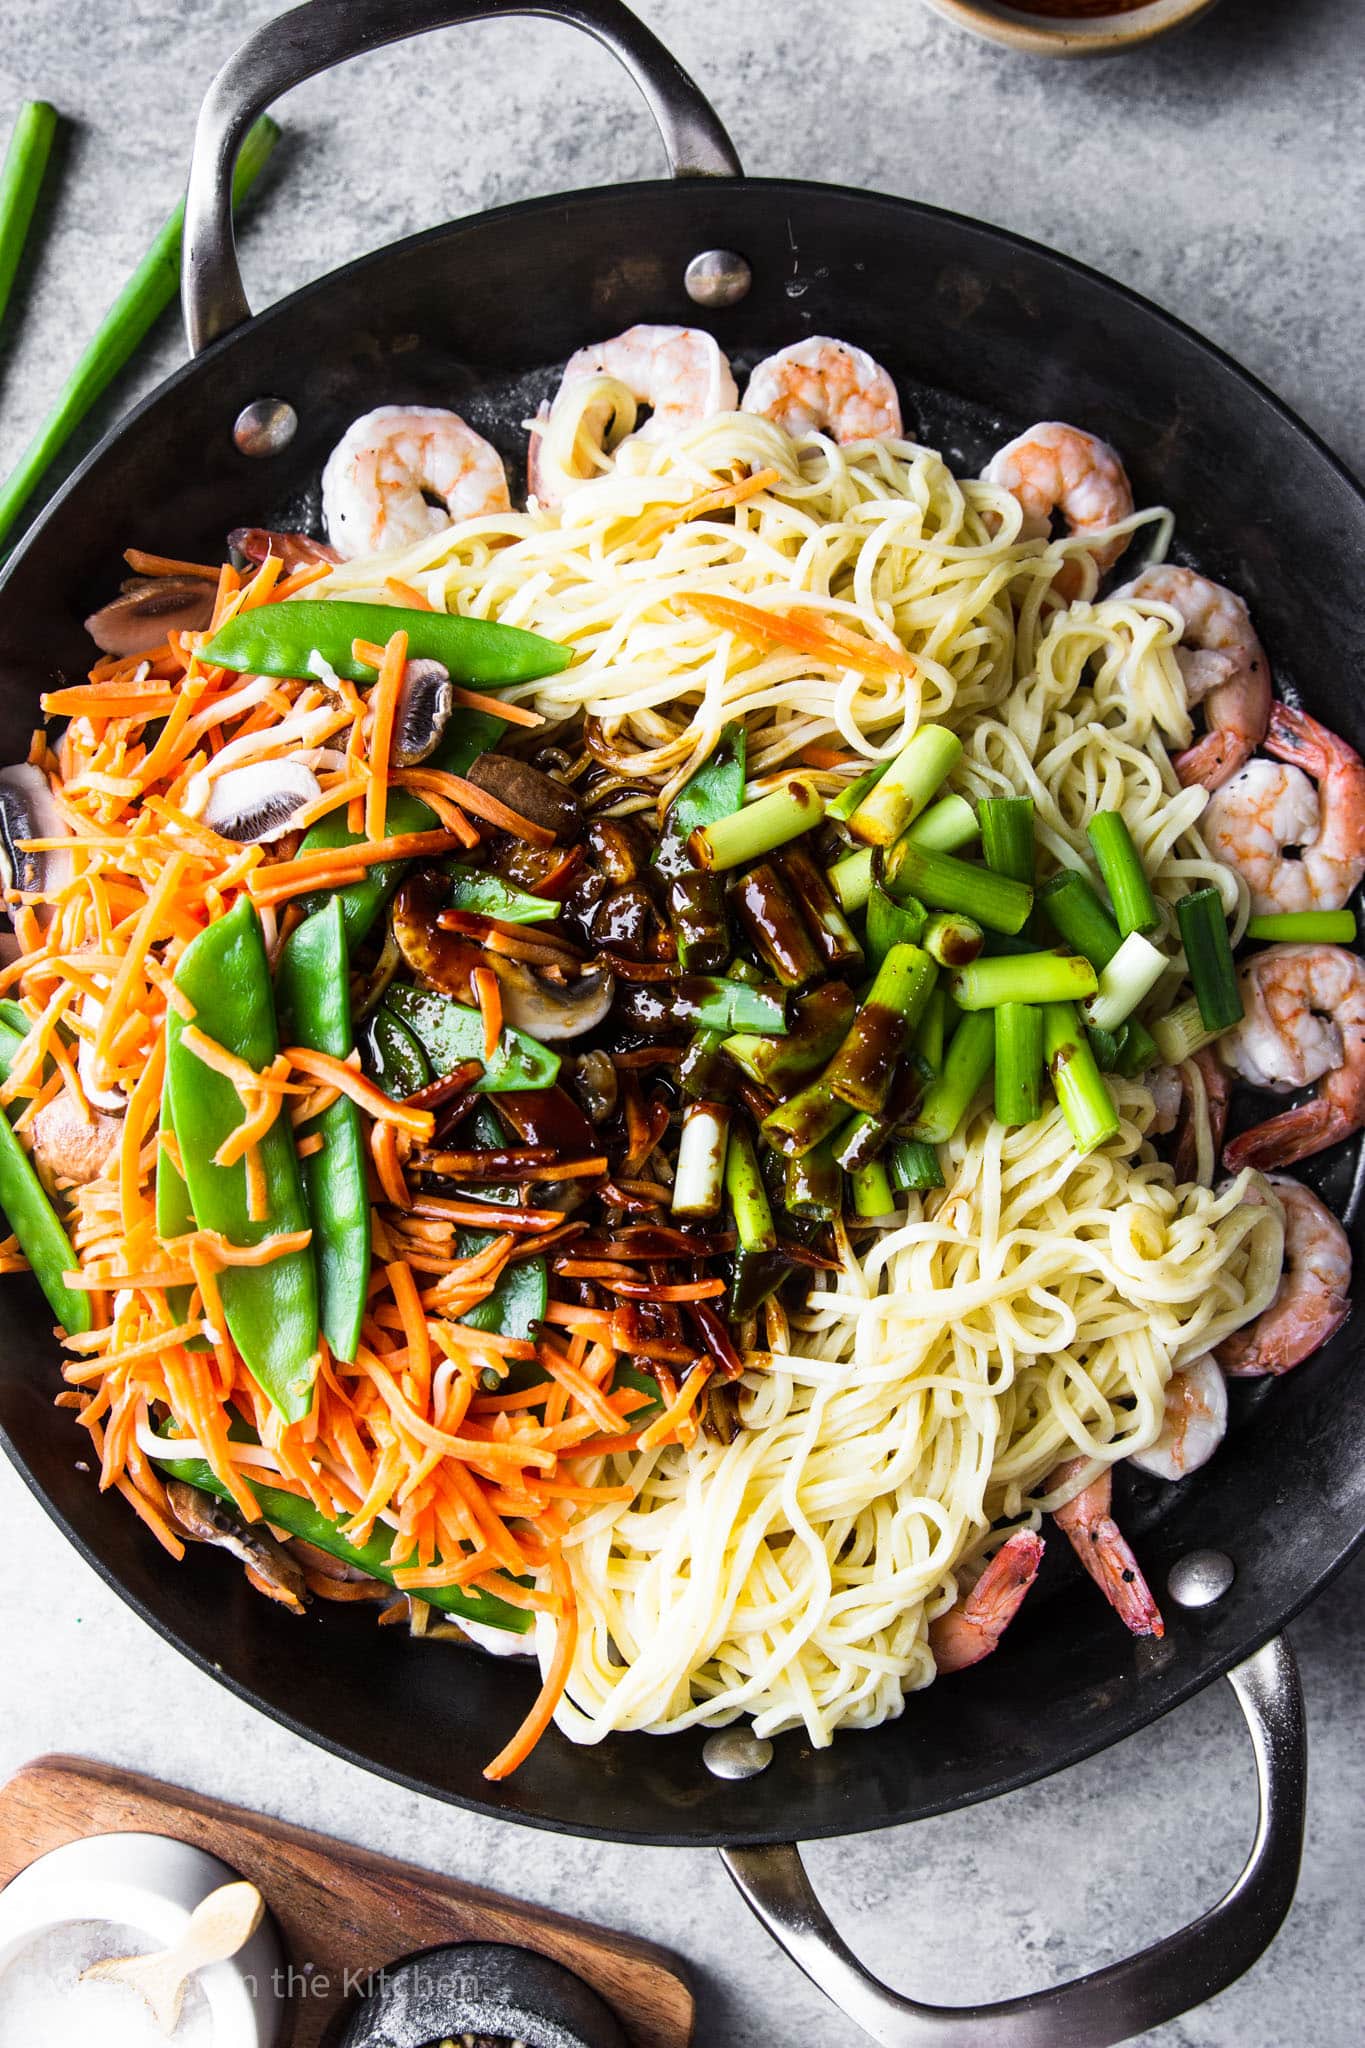 the ingredients for shrimp lo mein in a large black skillet.